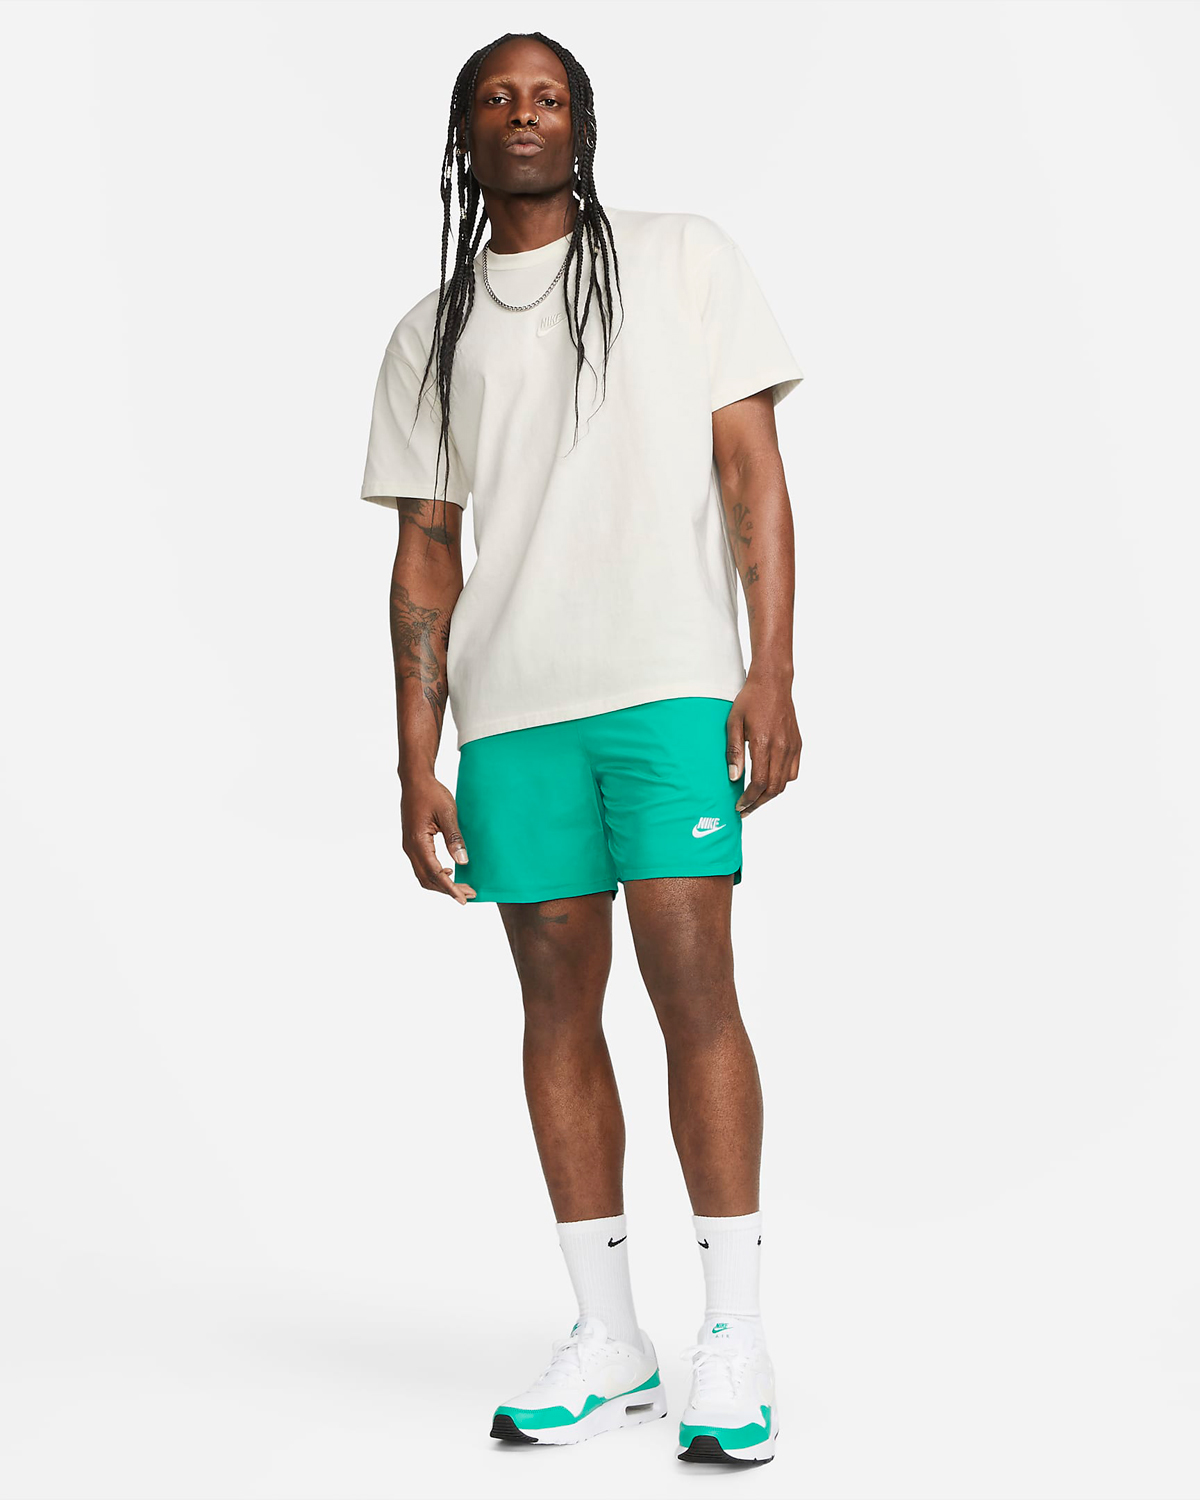 Nike-Clear-Jade-Shorts